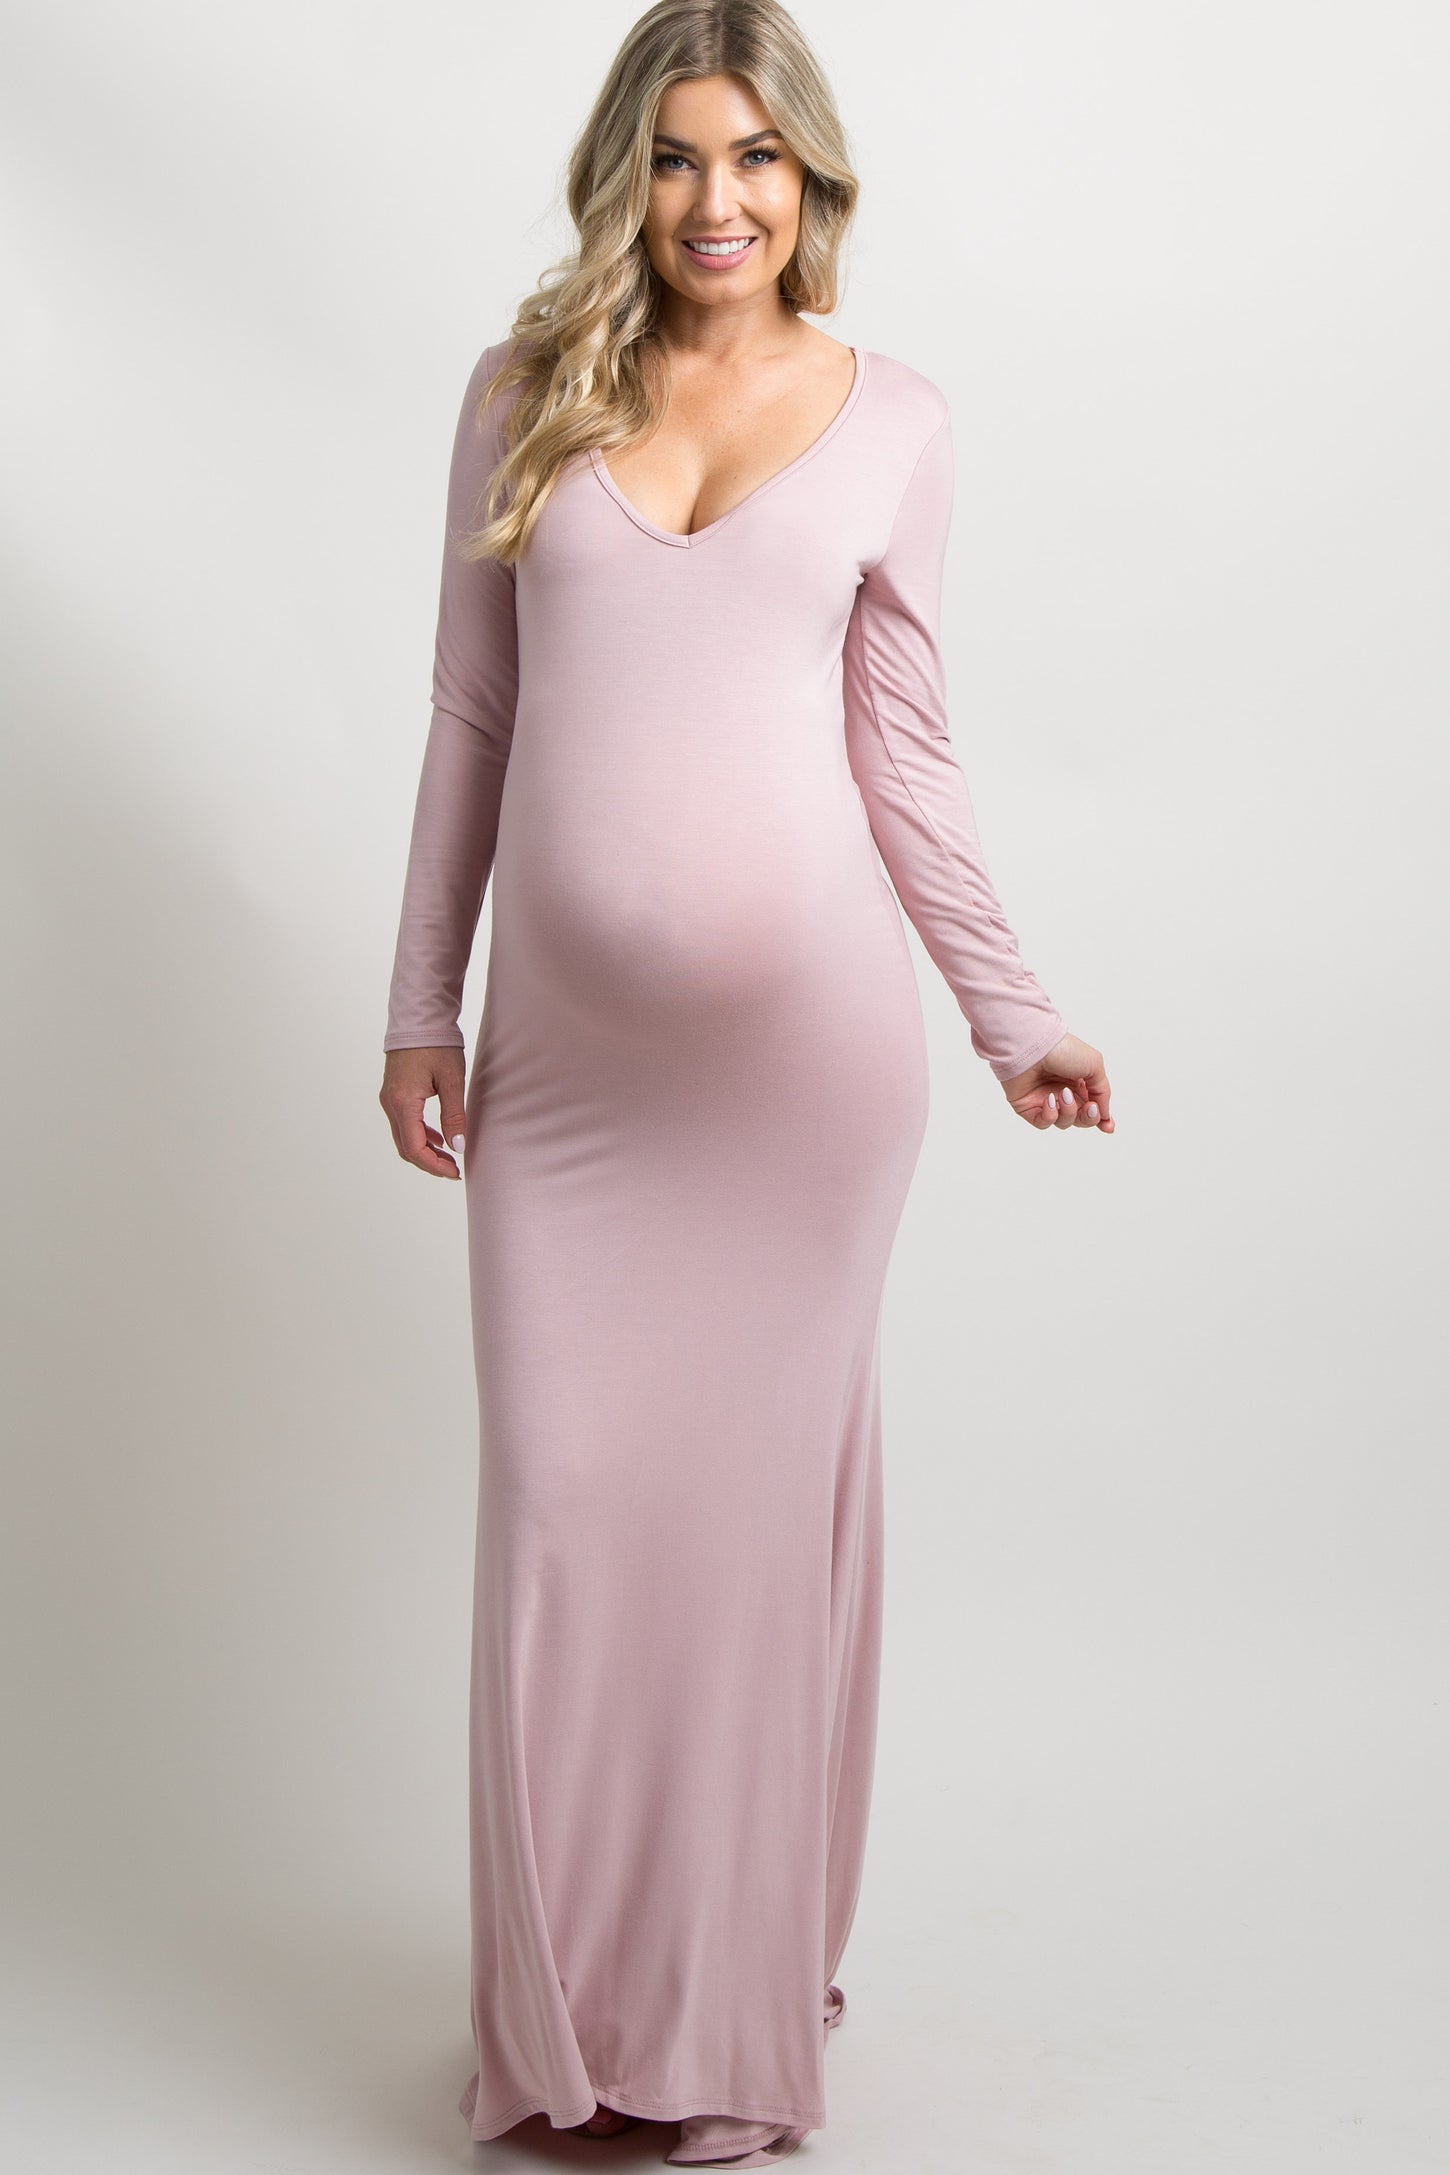 Hot Pink Bras Women's Undergarments for Dresses Open Maternity Bra